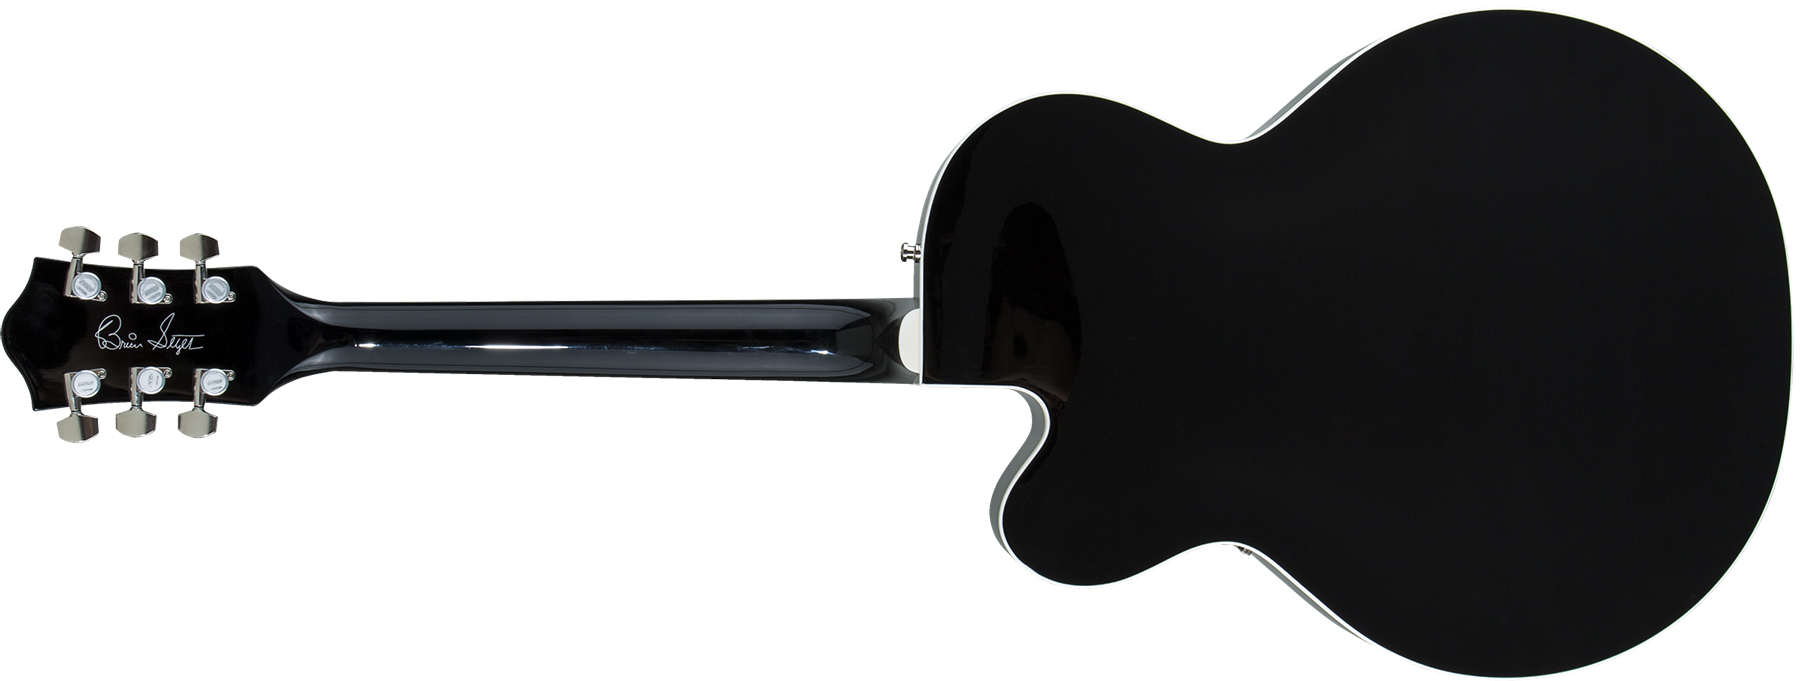 Gretsch Brian Setzer G6120t-bsnsh Nashville Japon Signature Bigsby Eb - Black Lacquer - Semi-hollow electric guitar - Variation 1